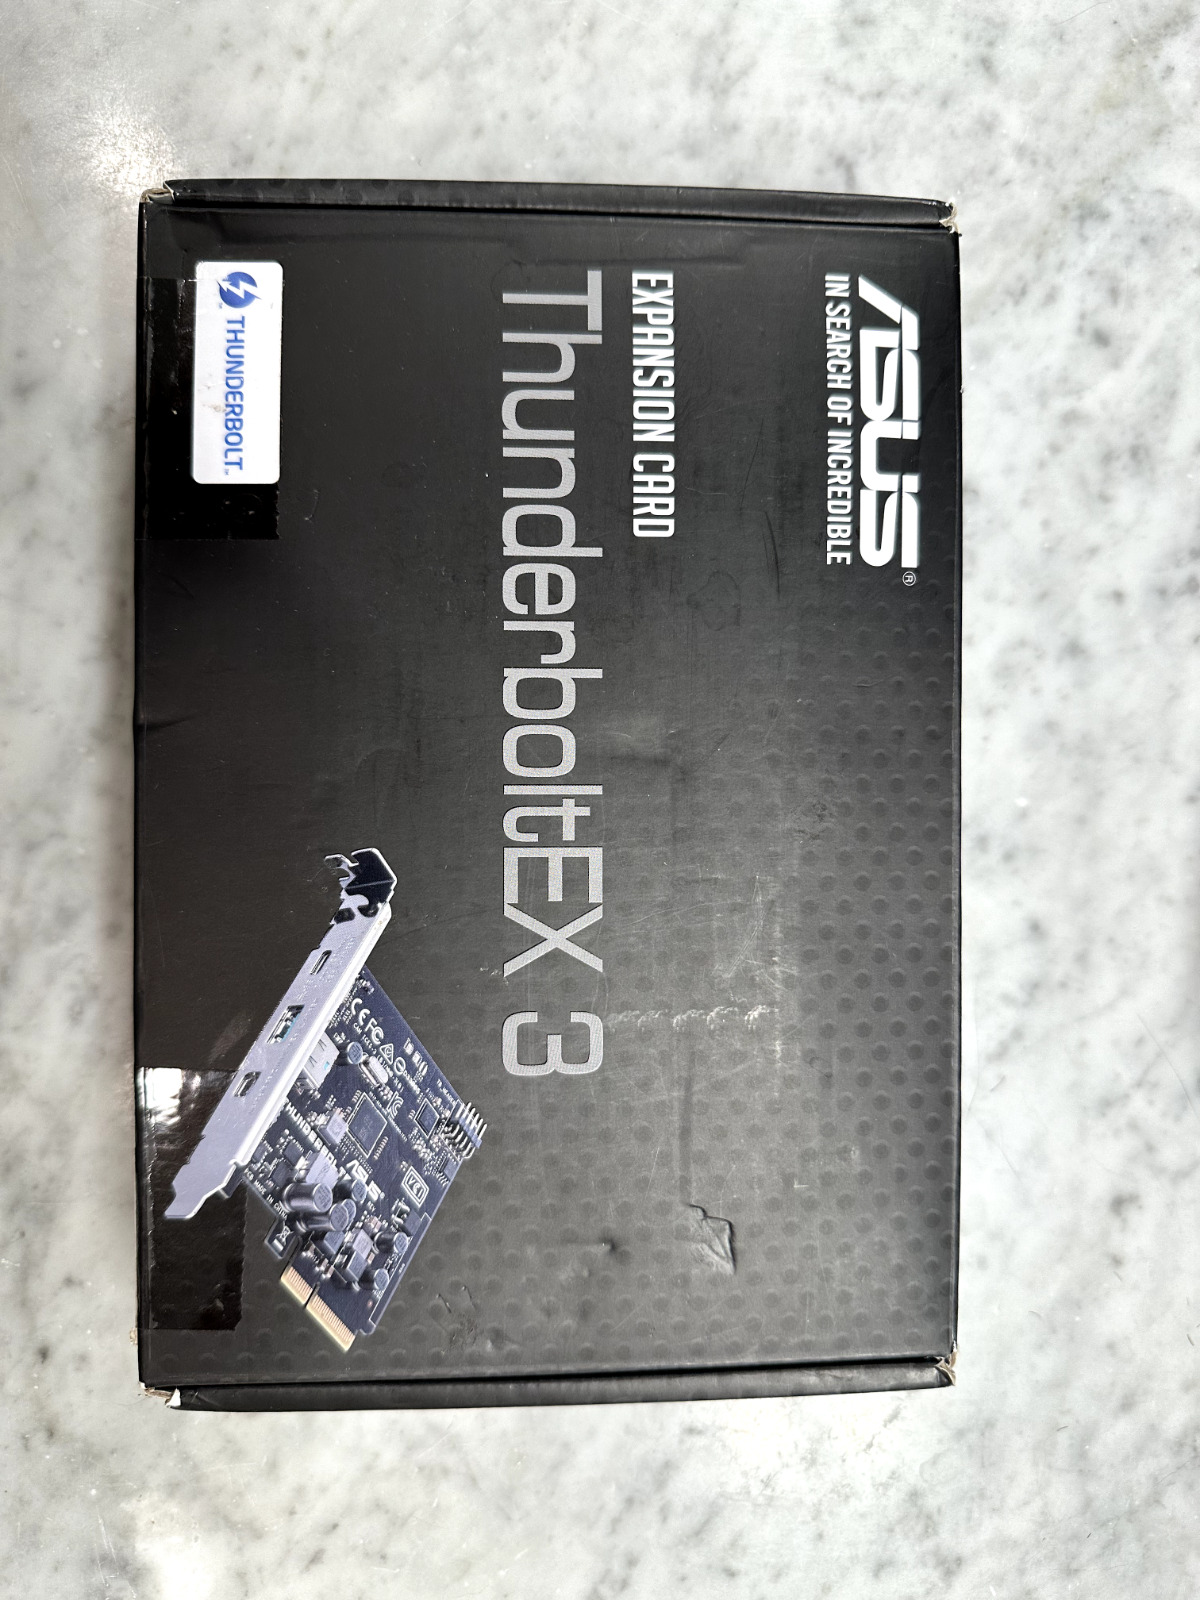 Asus ThunderboltEX 3  USB 3.1 Expansion Card